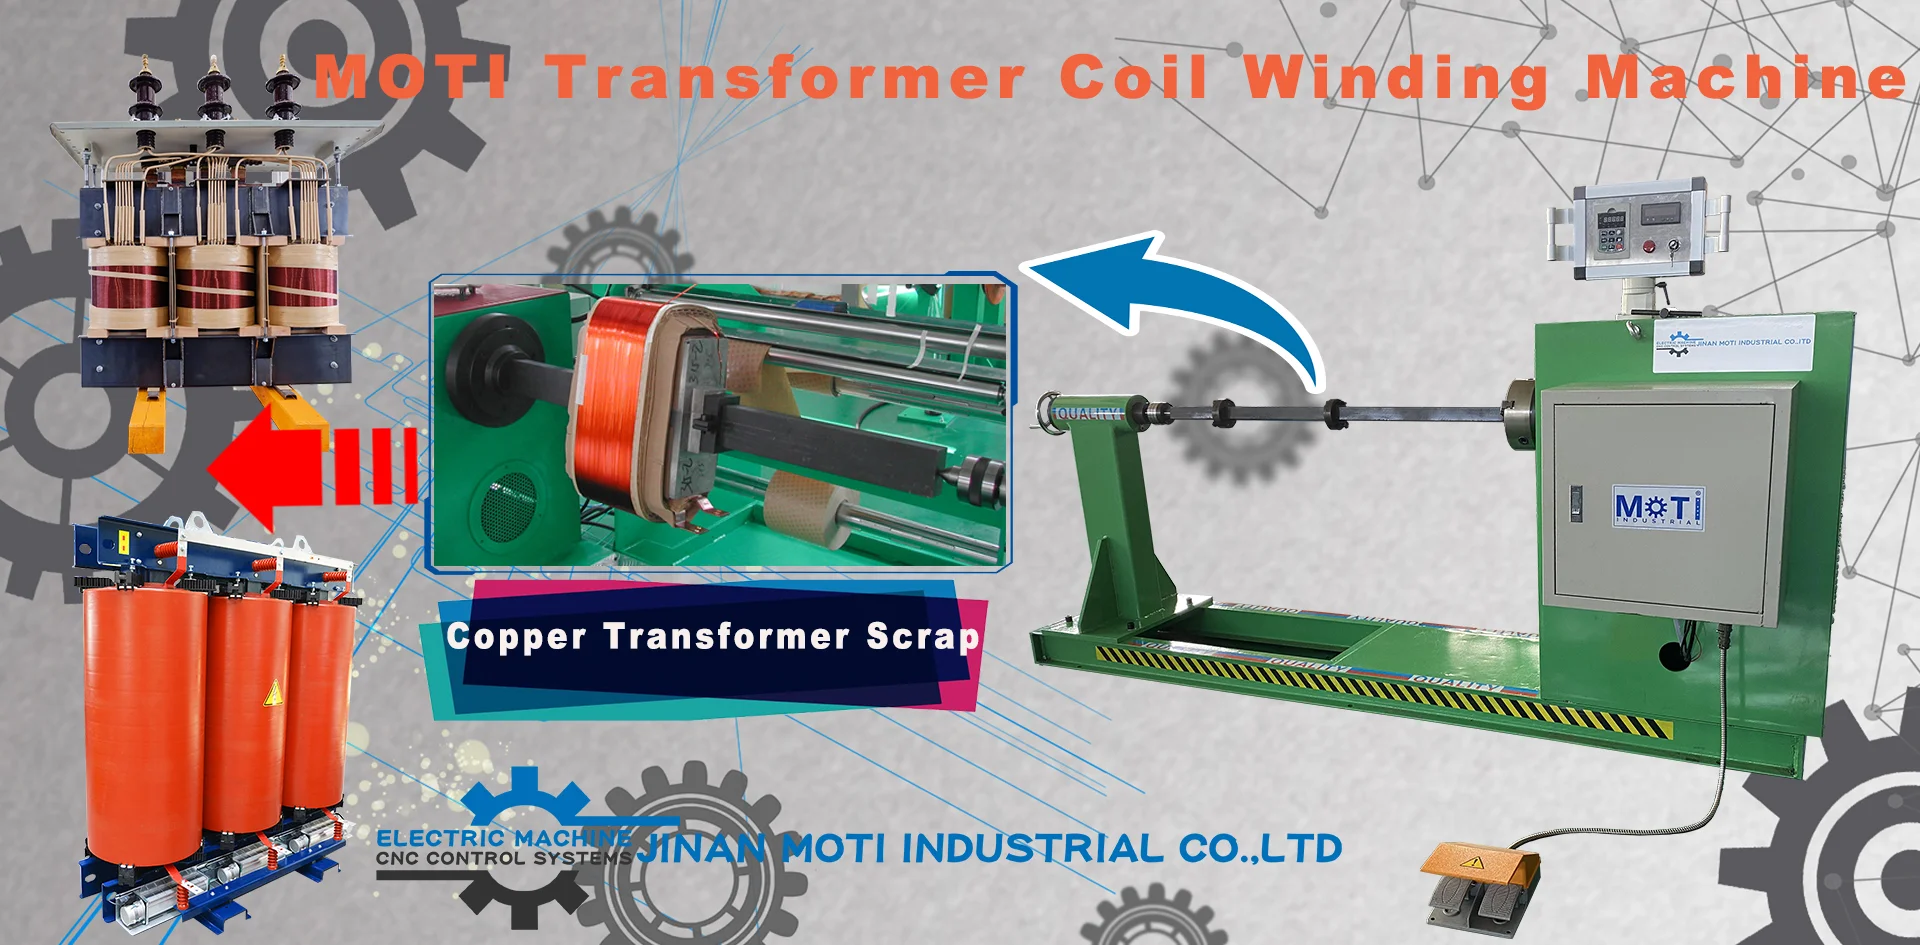 frtransformer coil winding machine-20210713